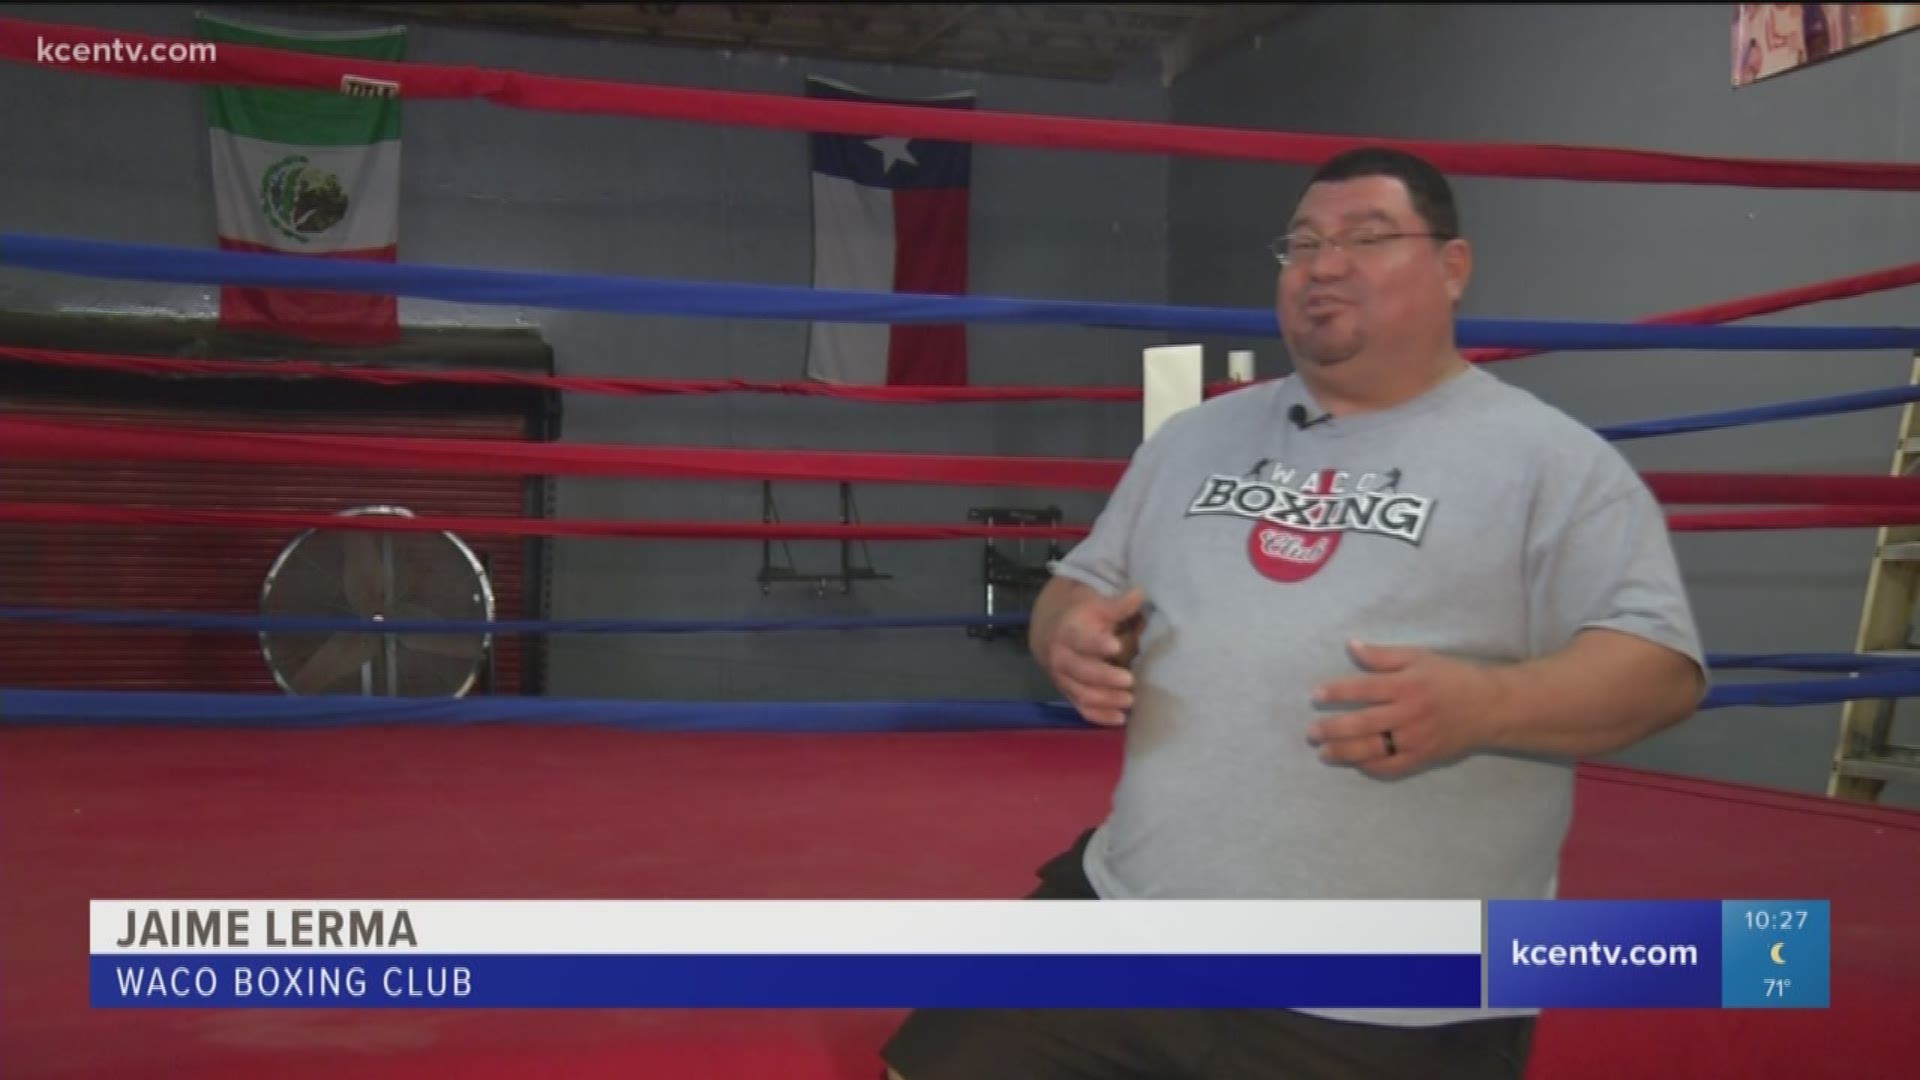  Waco boxing club to host exhibition Saturday